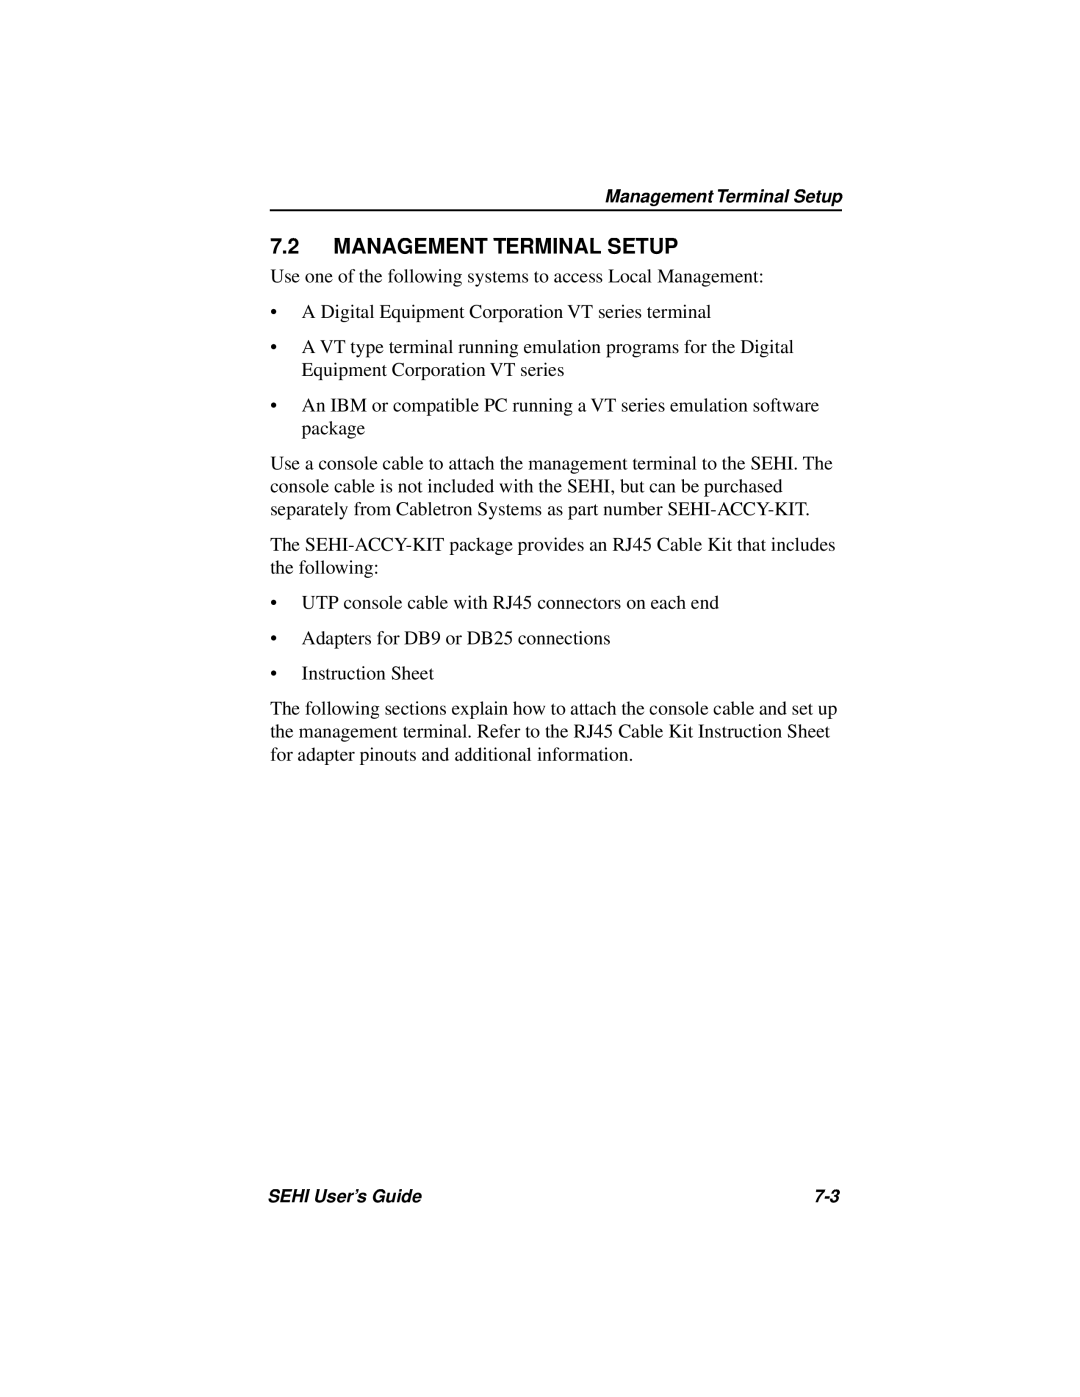 Cabletron Systems SEHI-22FL manual Management Terminal Setup 